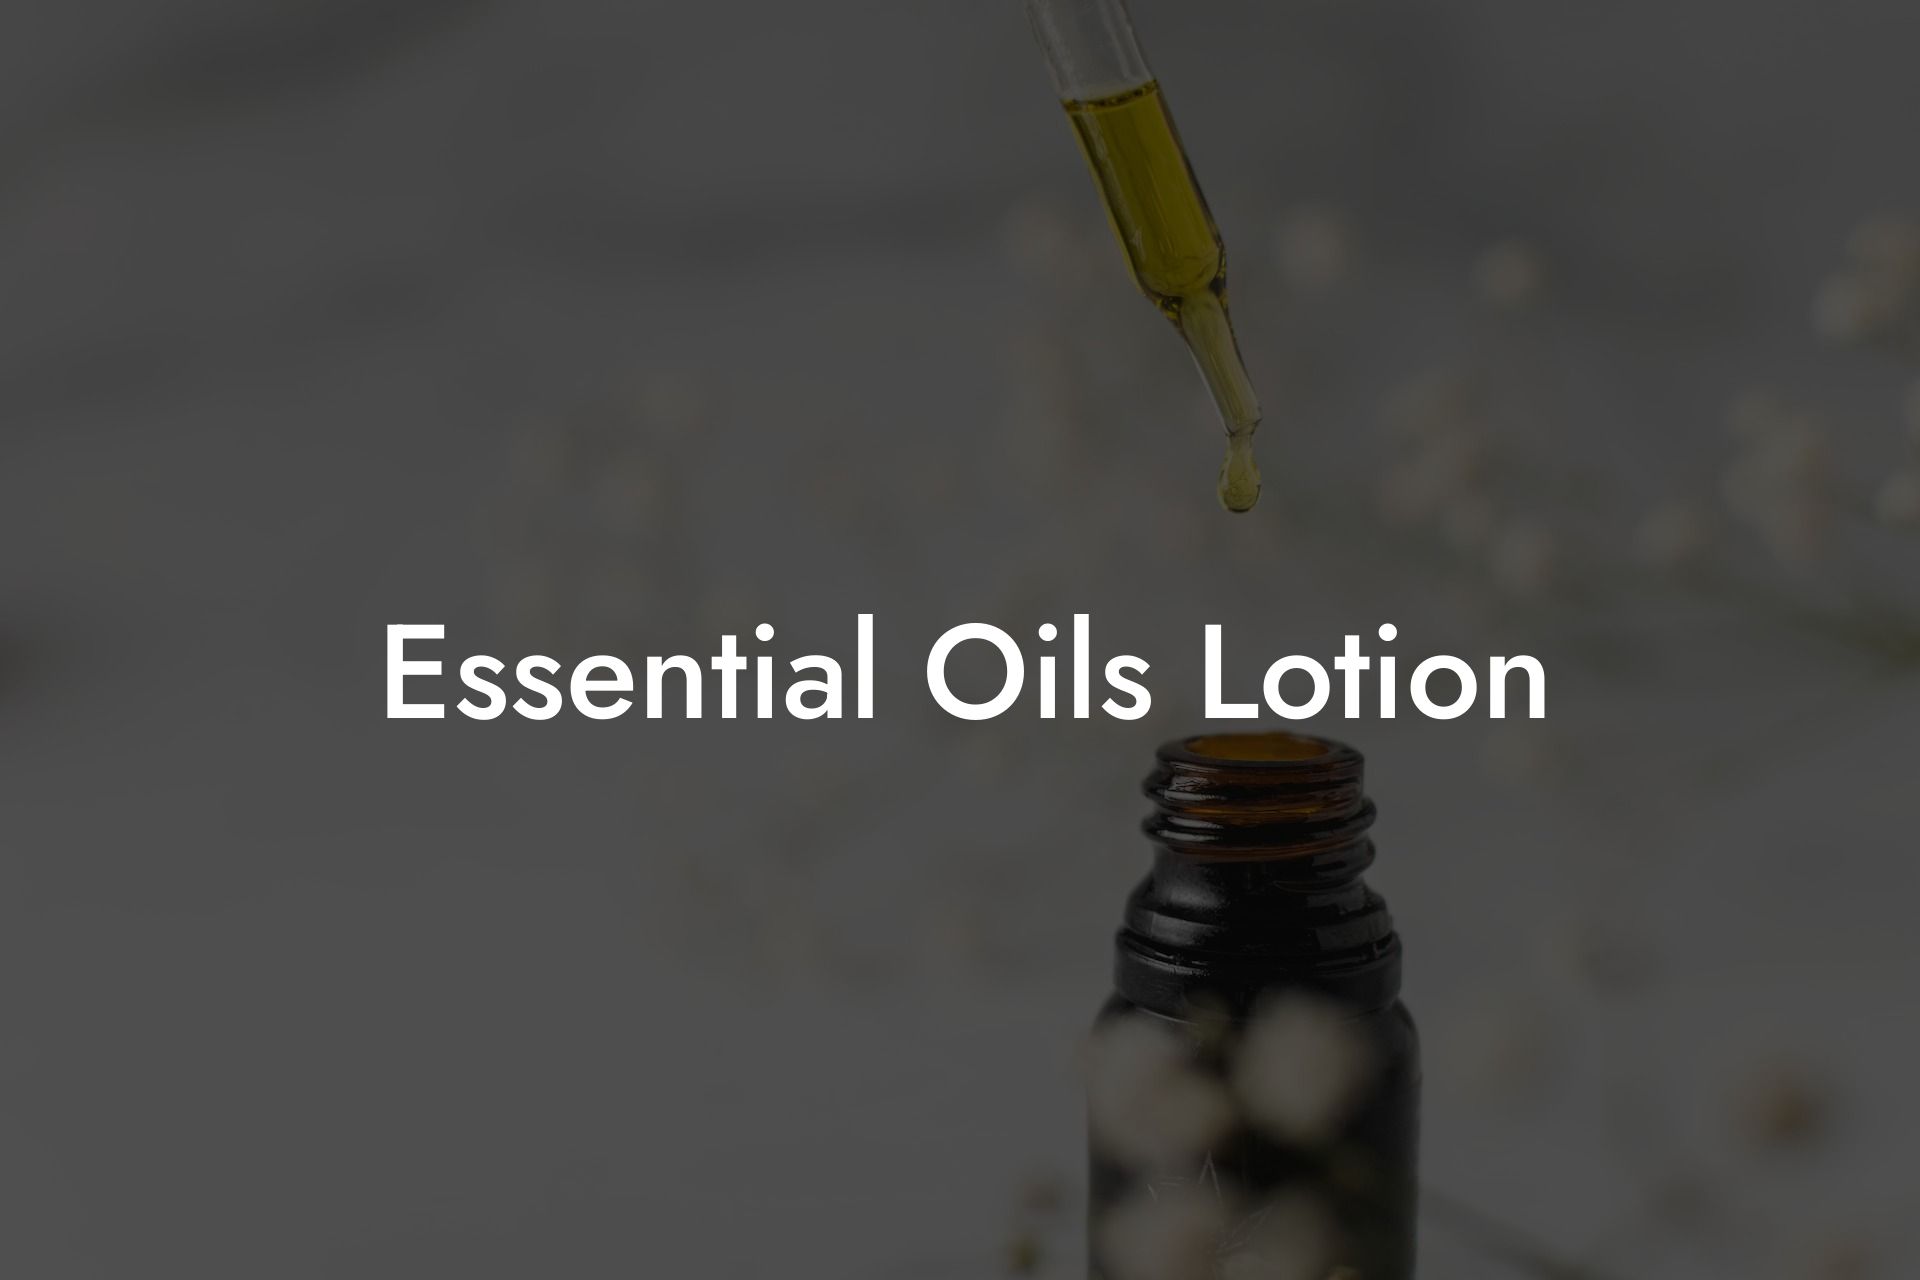 Essential Oils Lotion